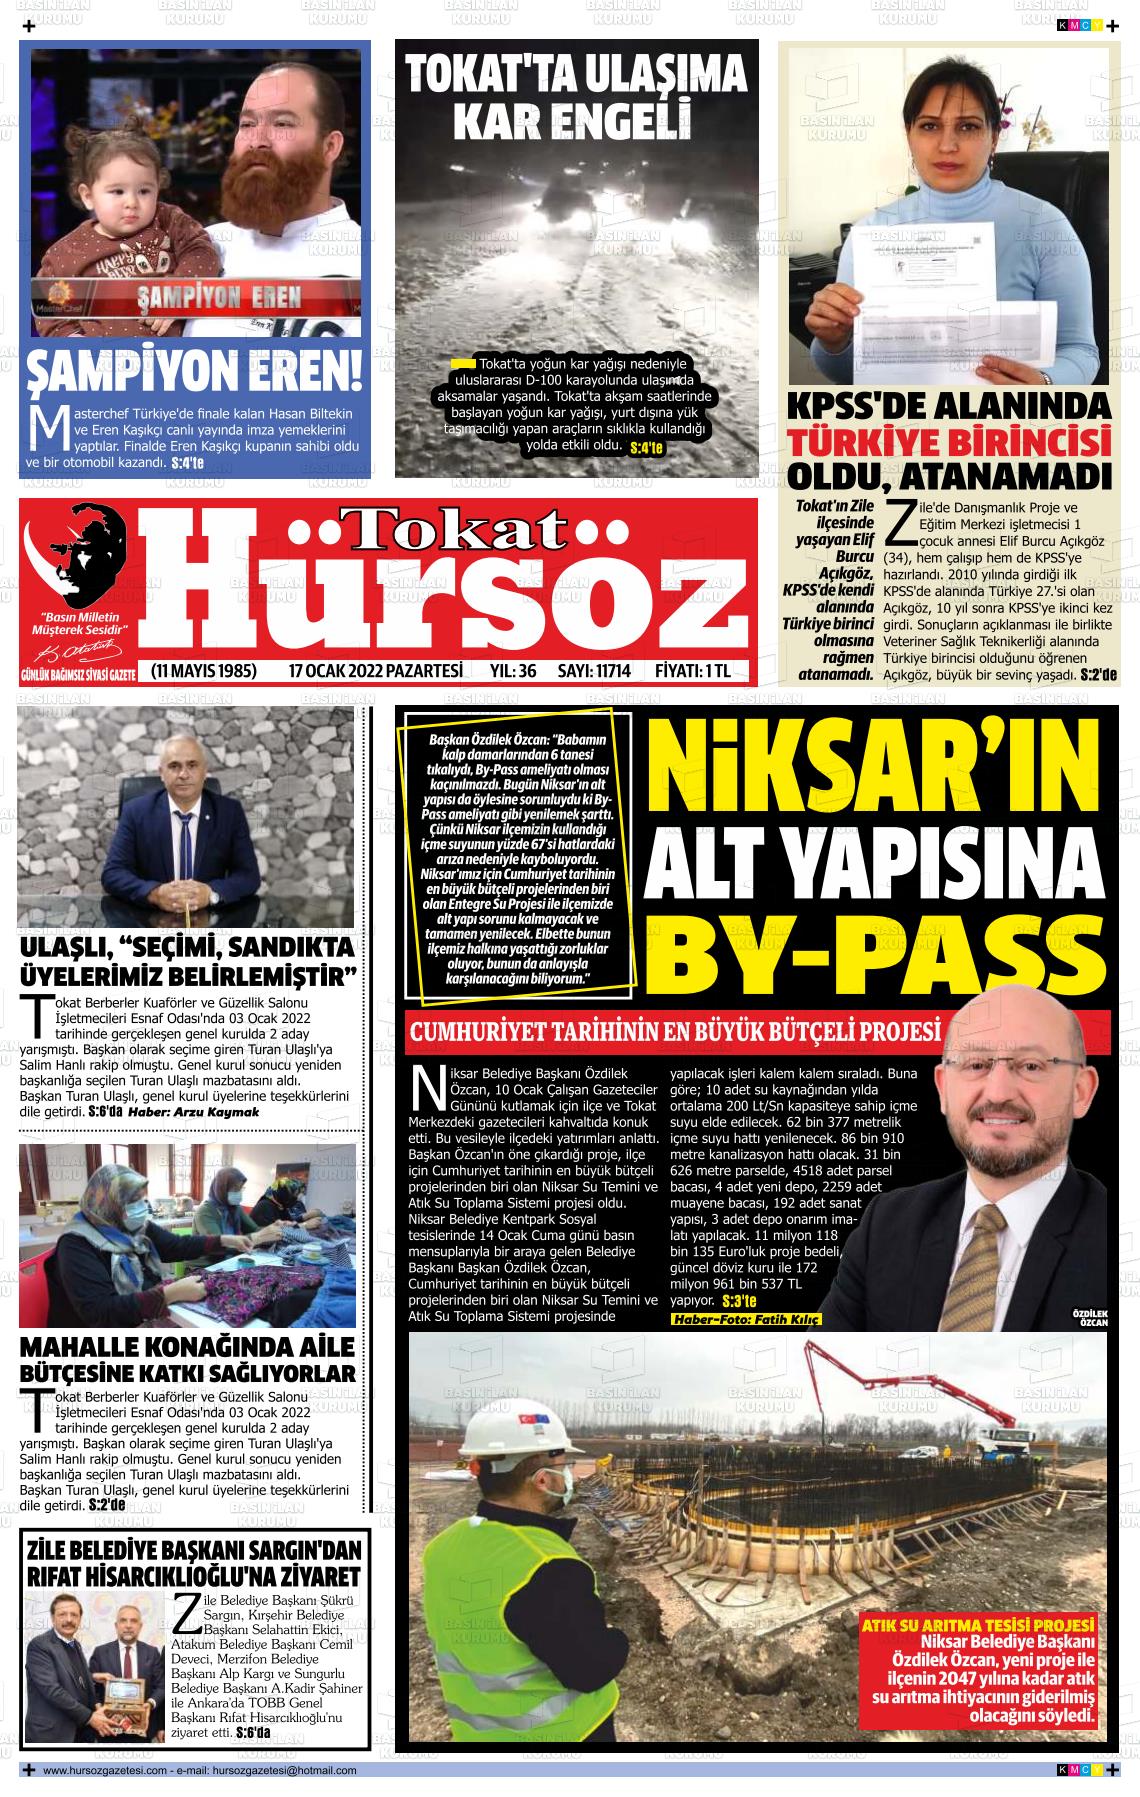 17 Ocak 2022 Hürsöz Gazete Manşeti